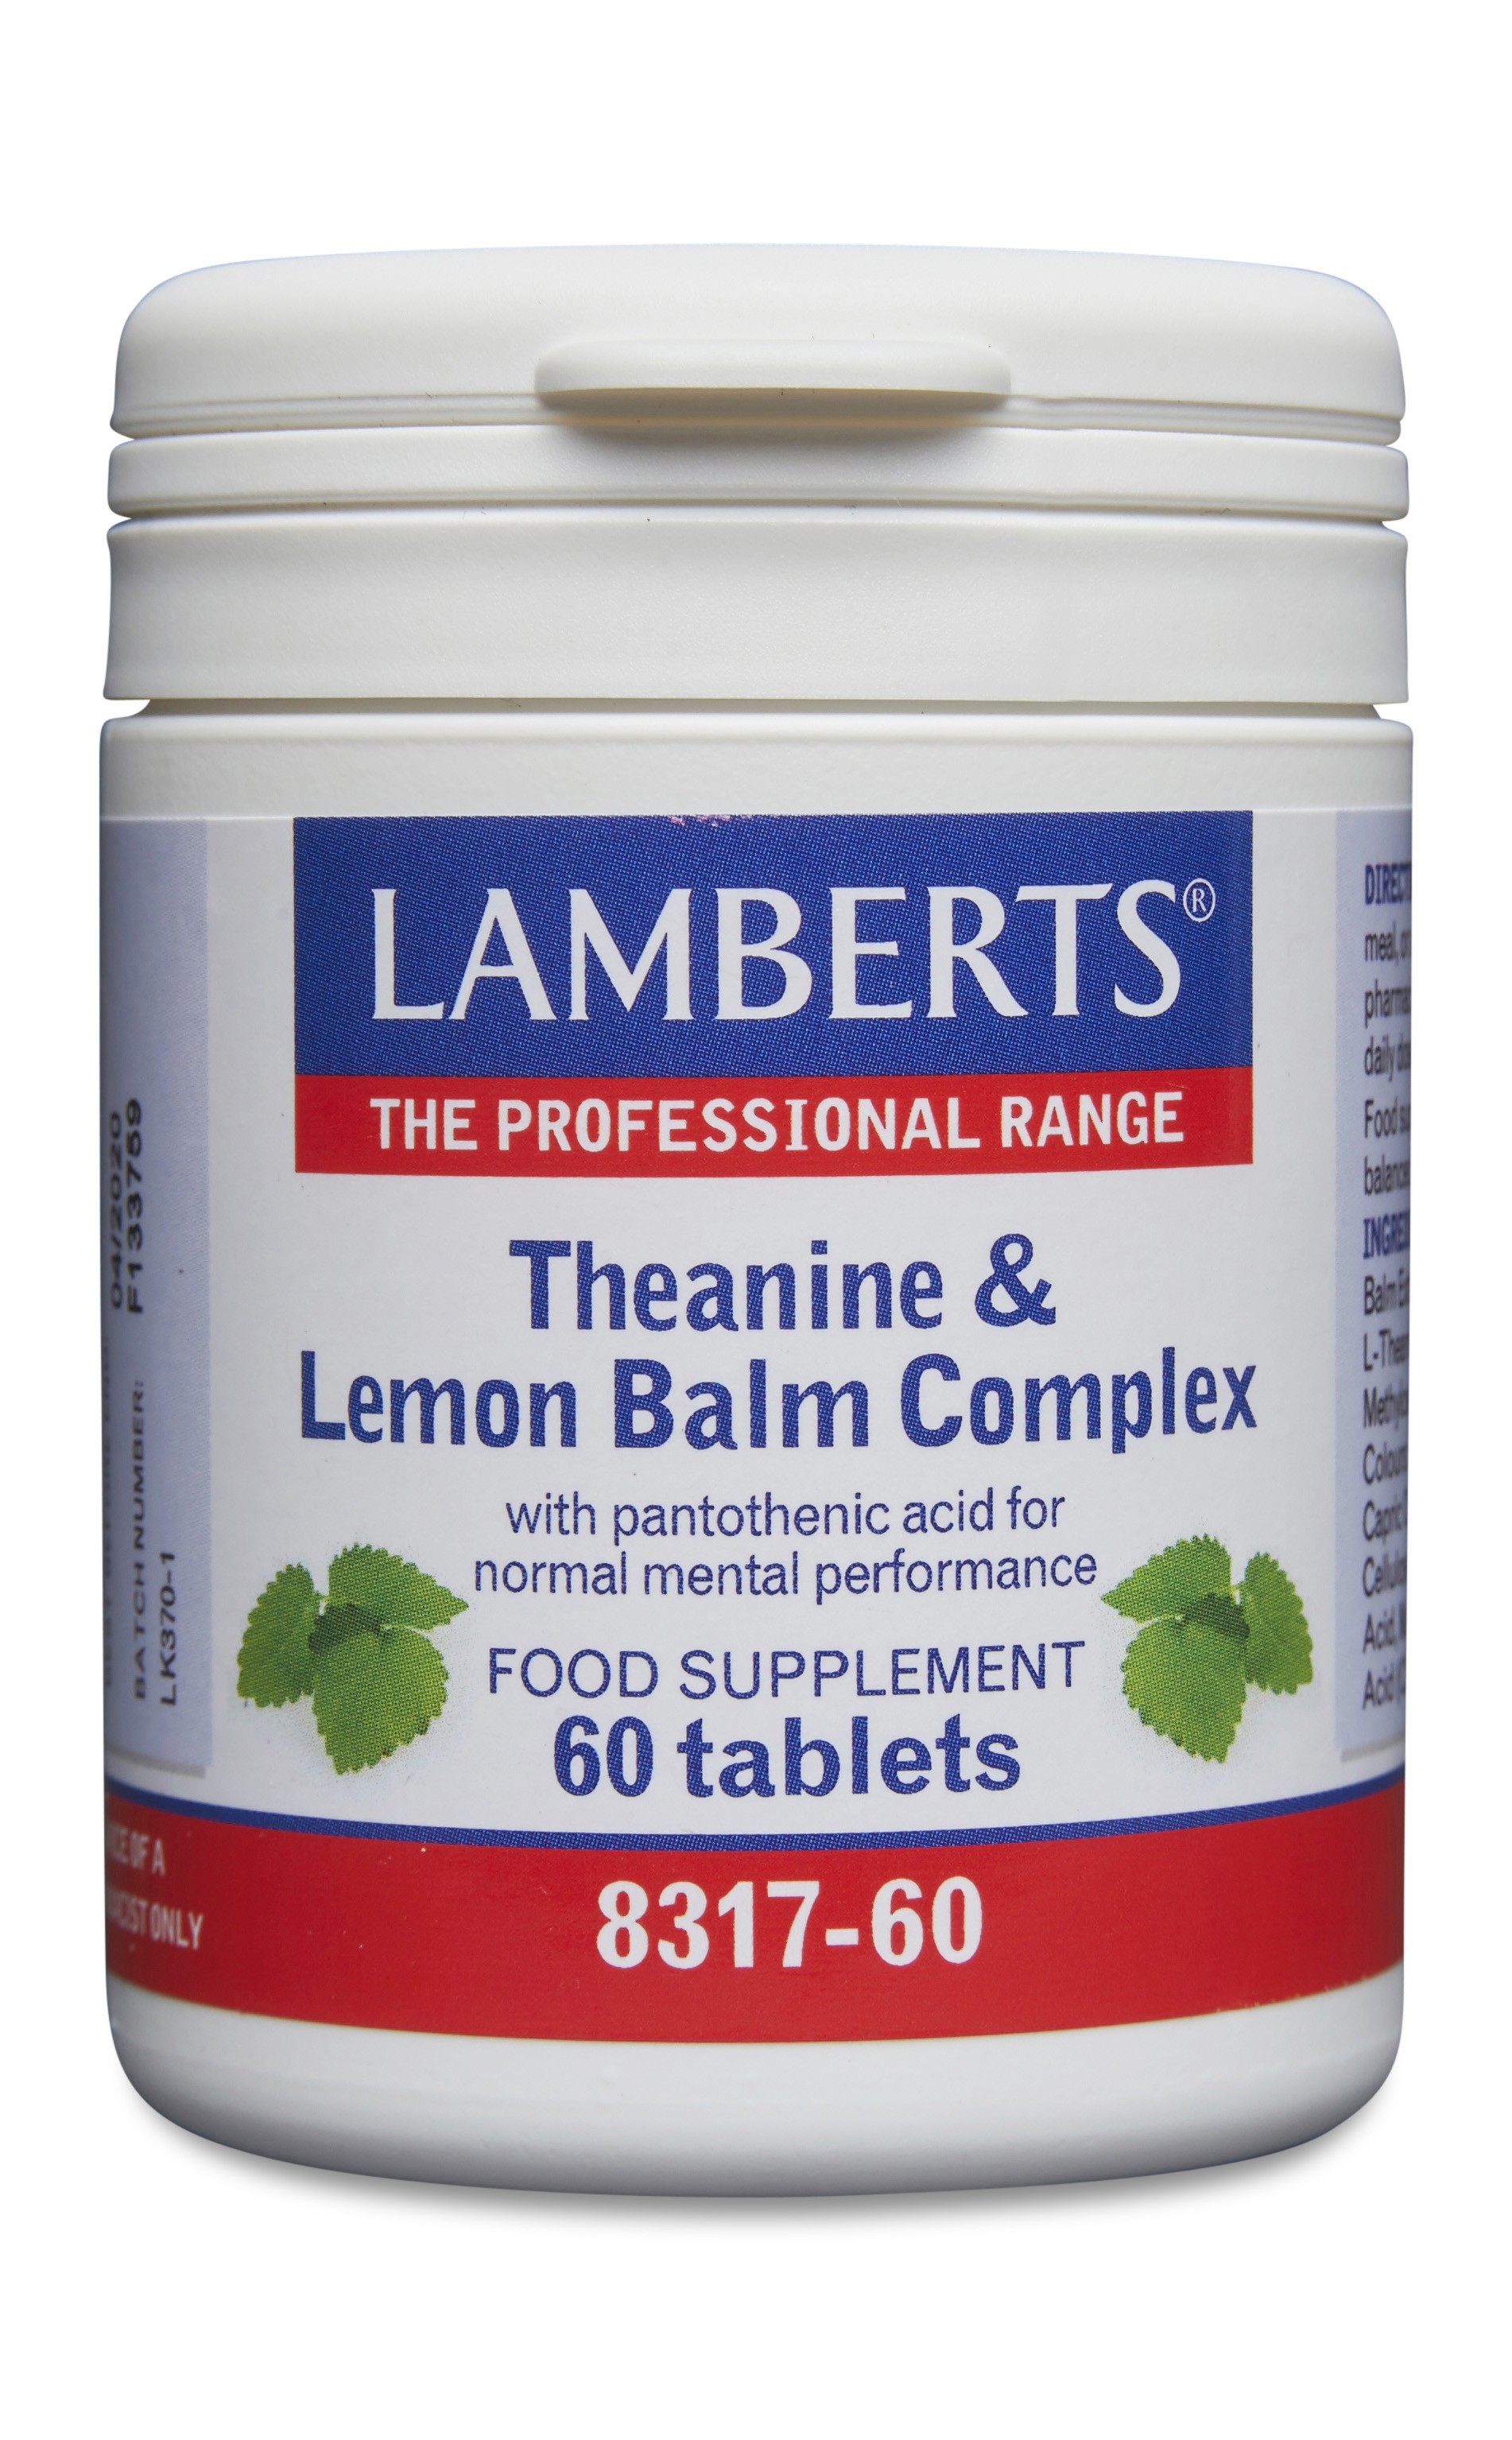 Lamberts Theanine & Lemon Balm Complex